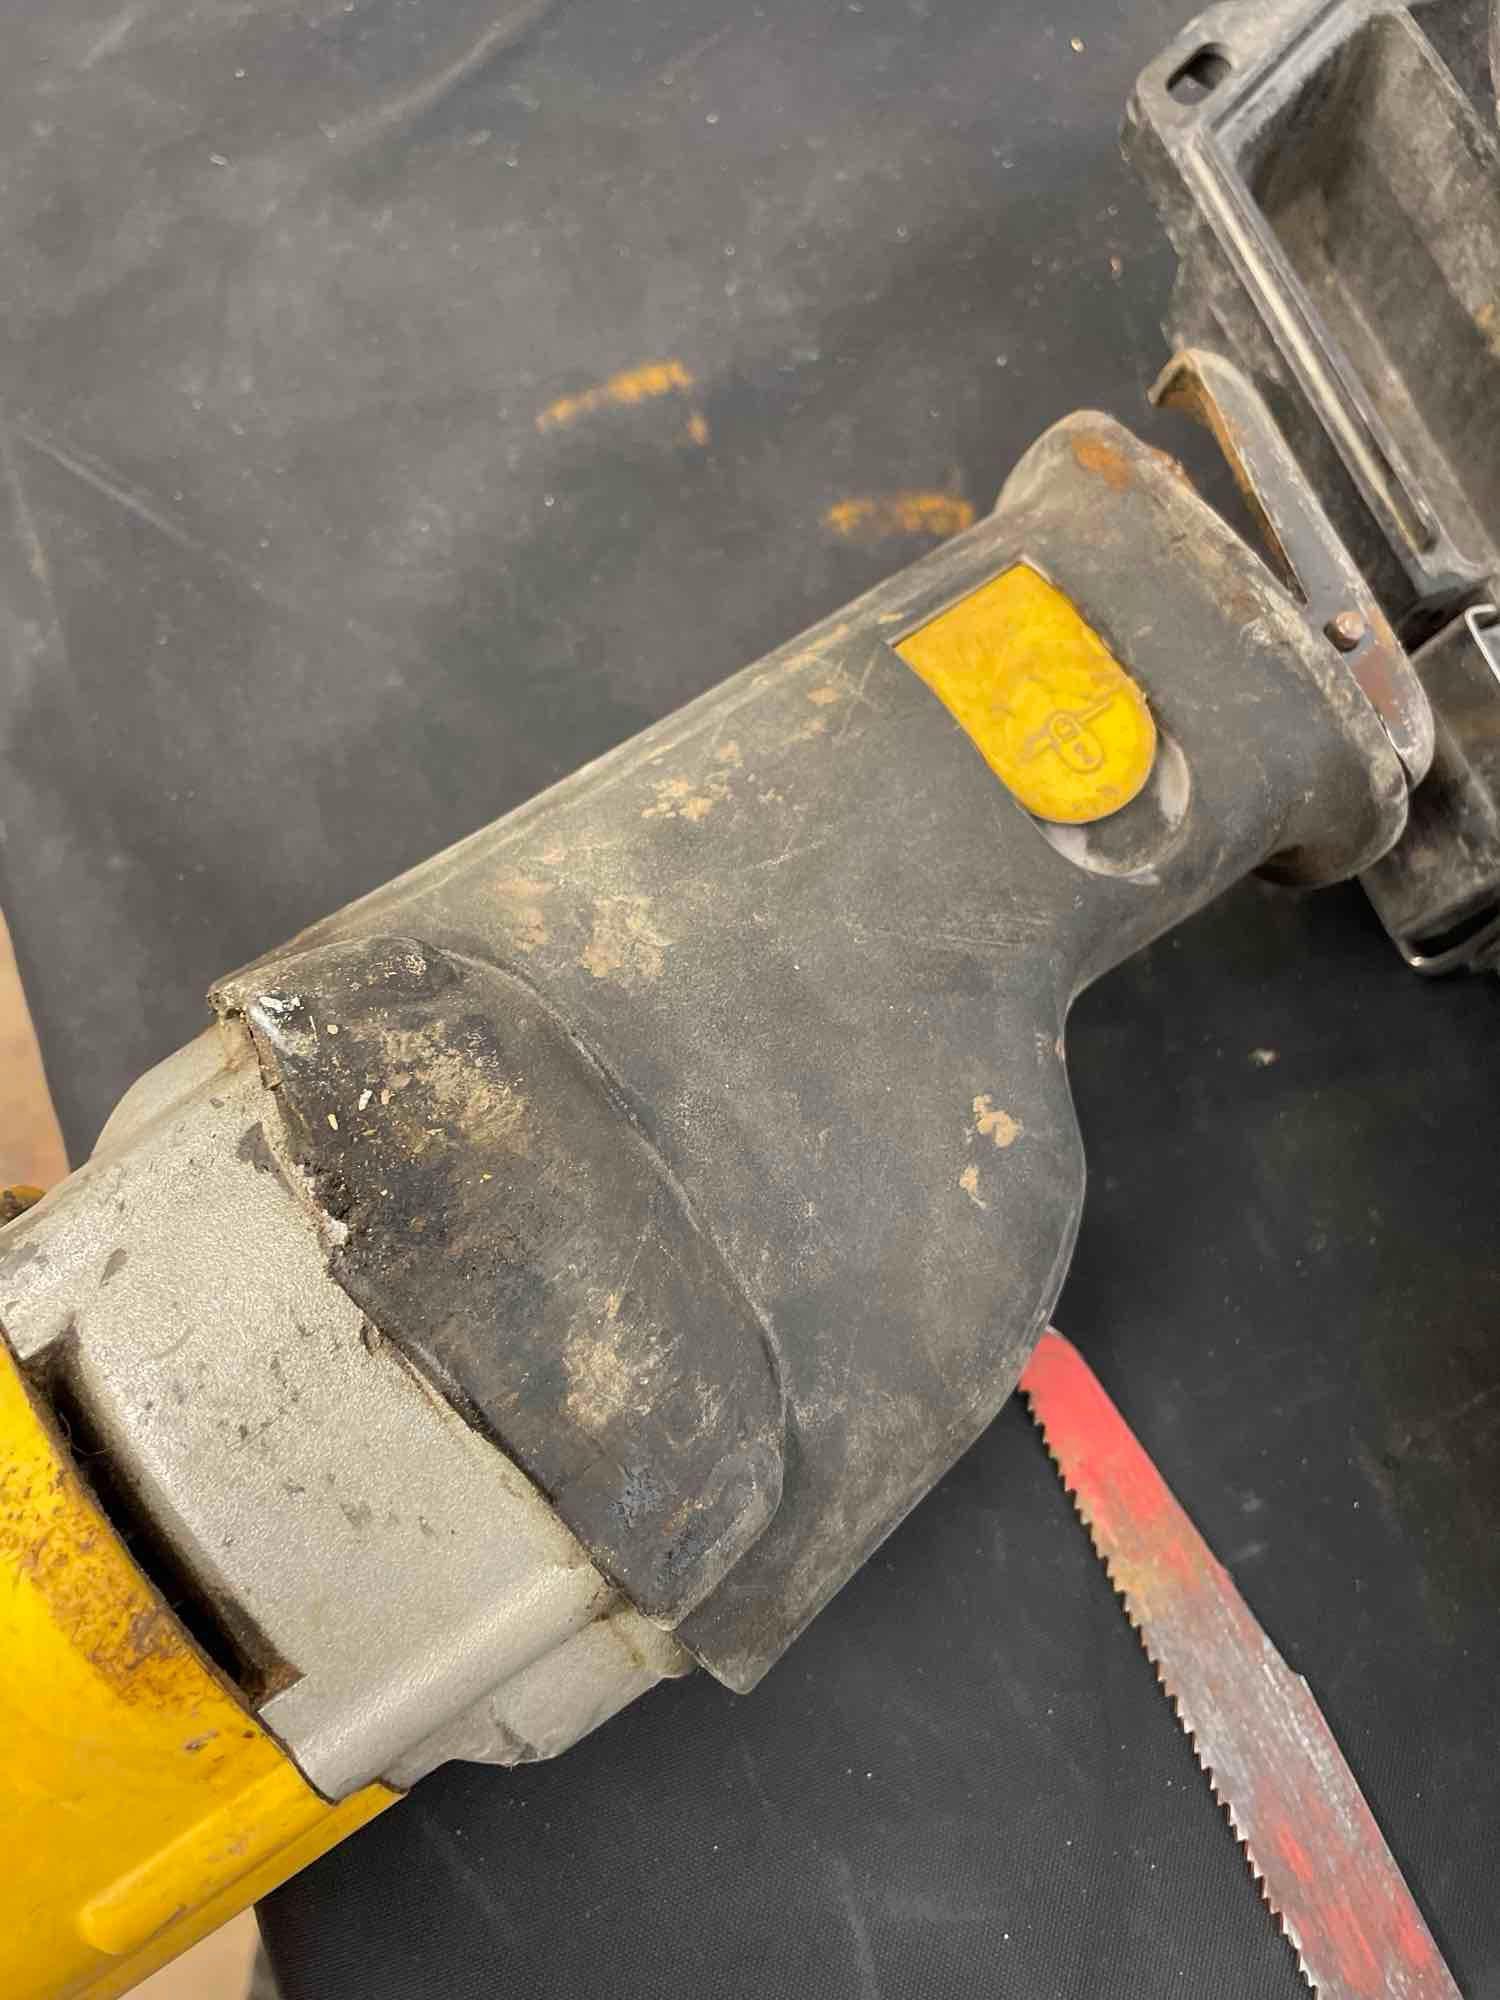 Ridgid Brushless motor and reciprocating saw